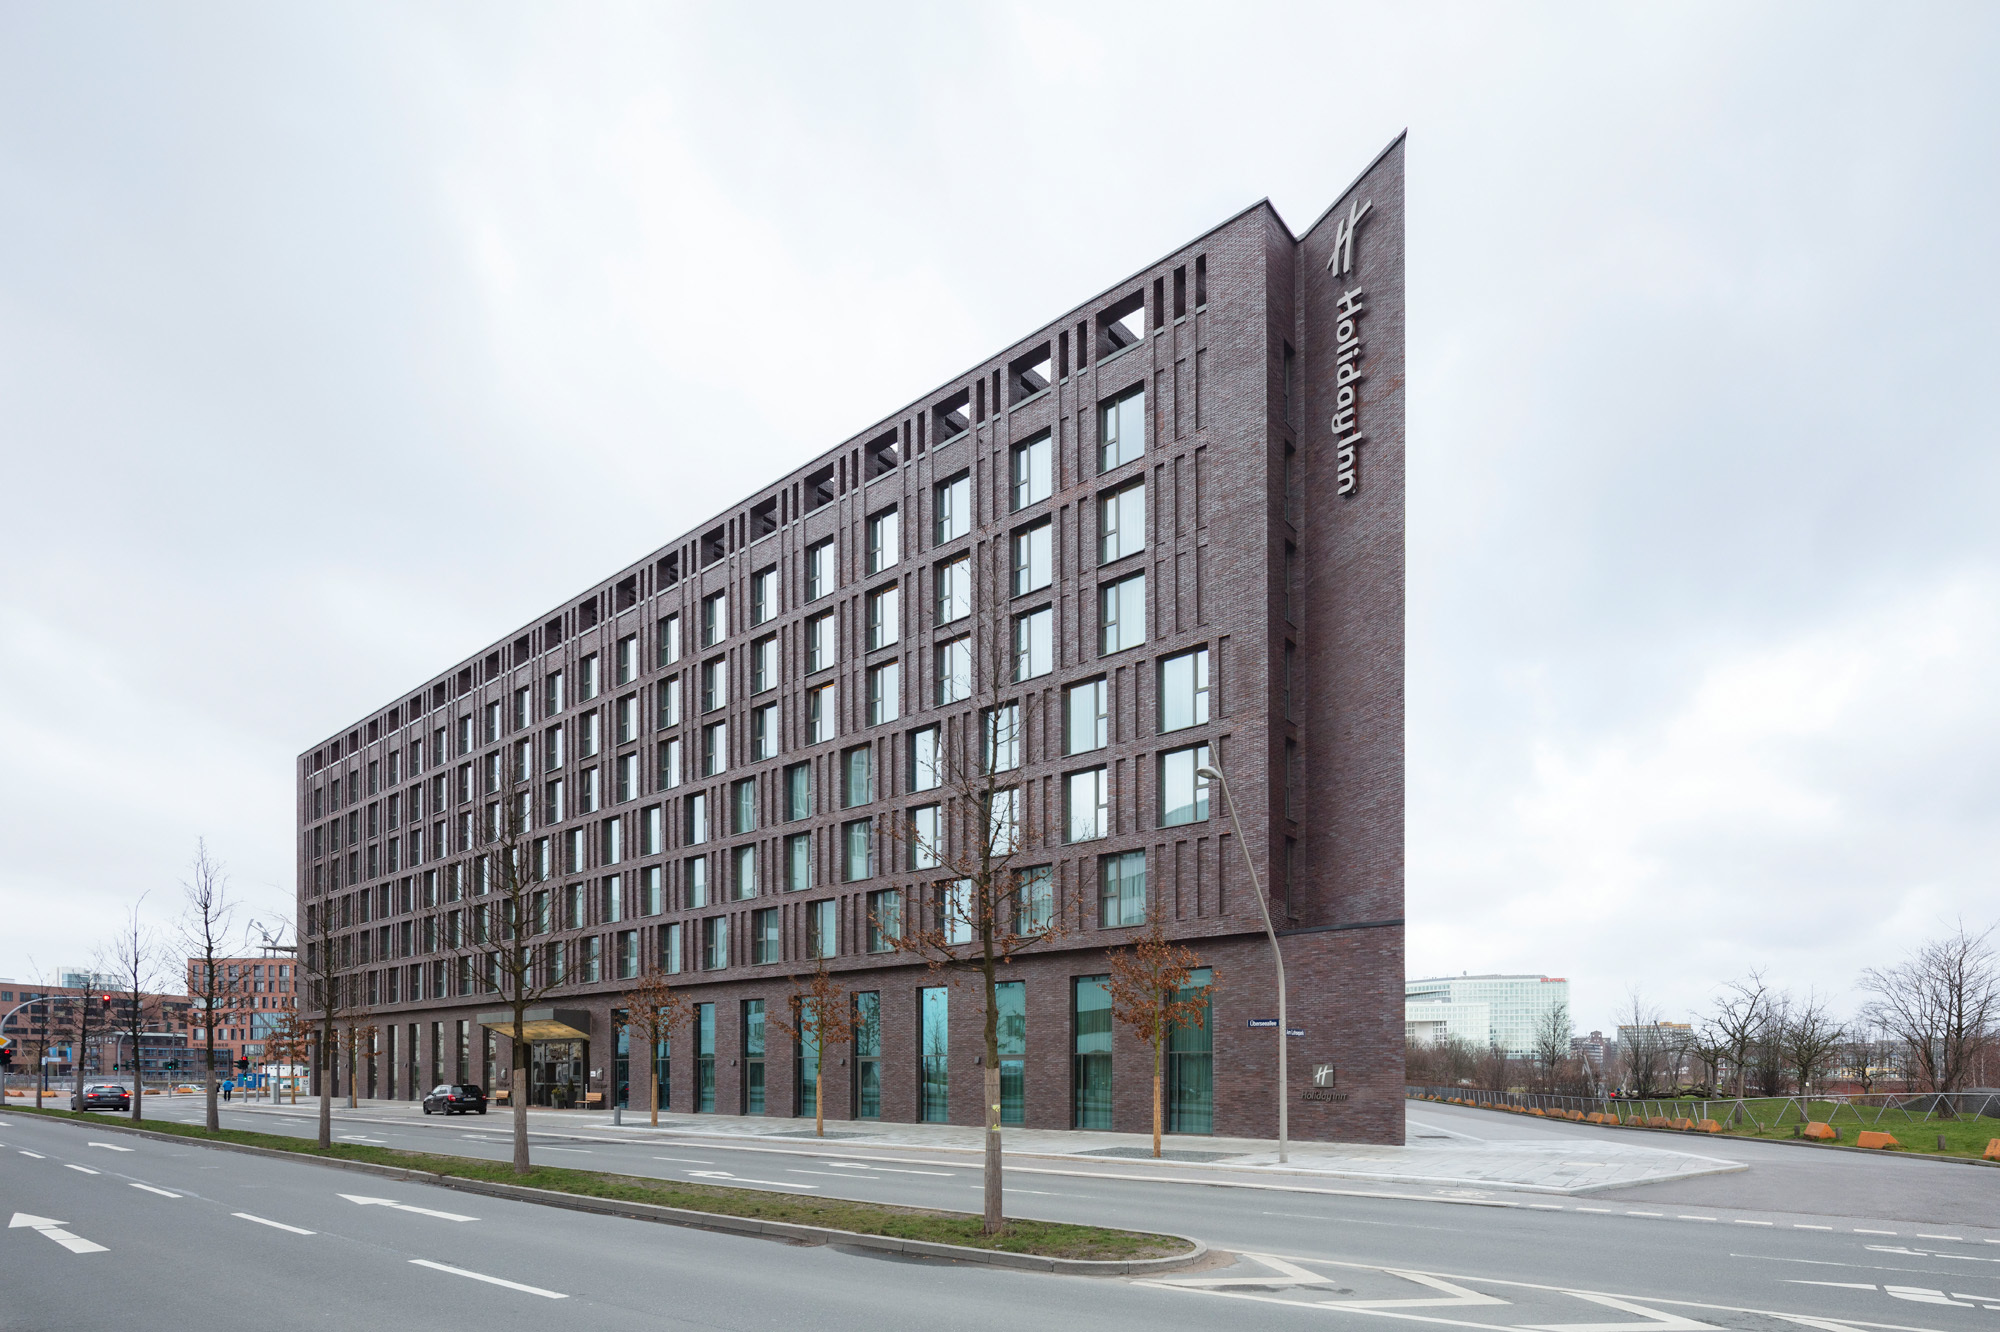 New Hotel Building in Hamburg’s HafenCity